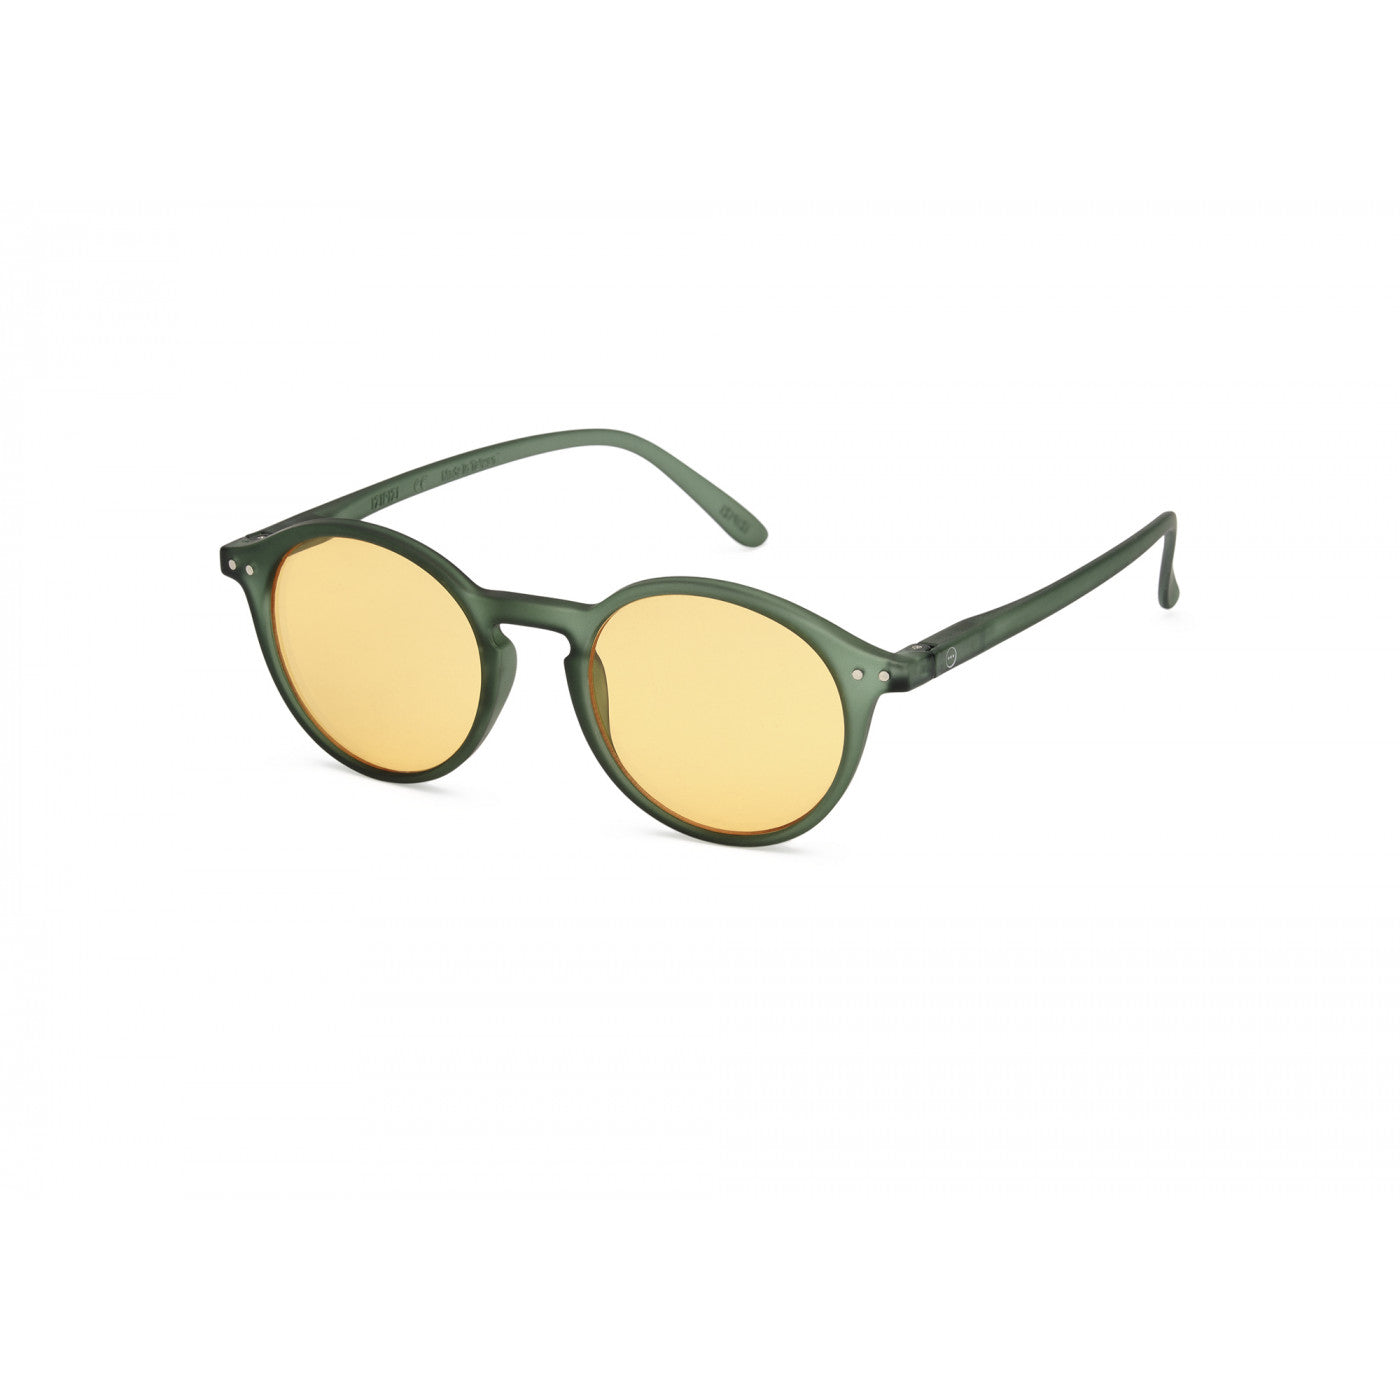 Sleeping Glasses  - #D Shape Sage Green